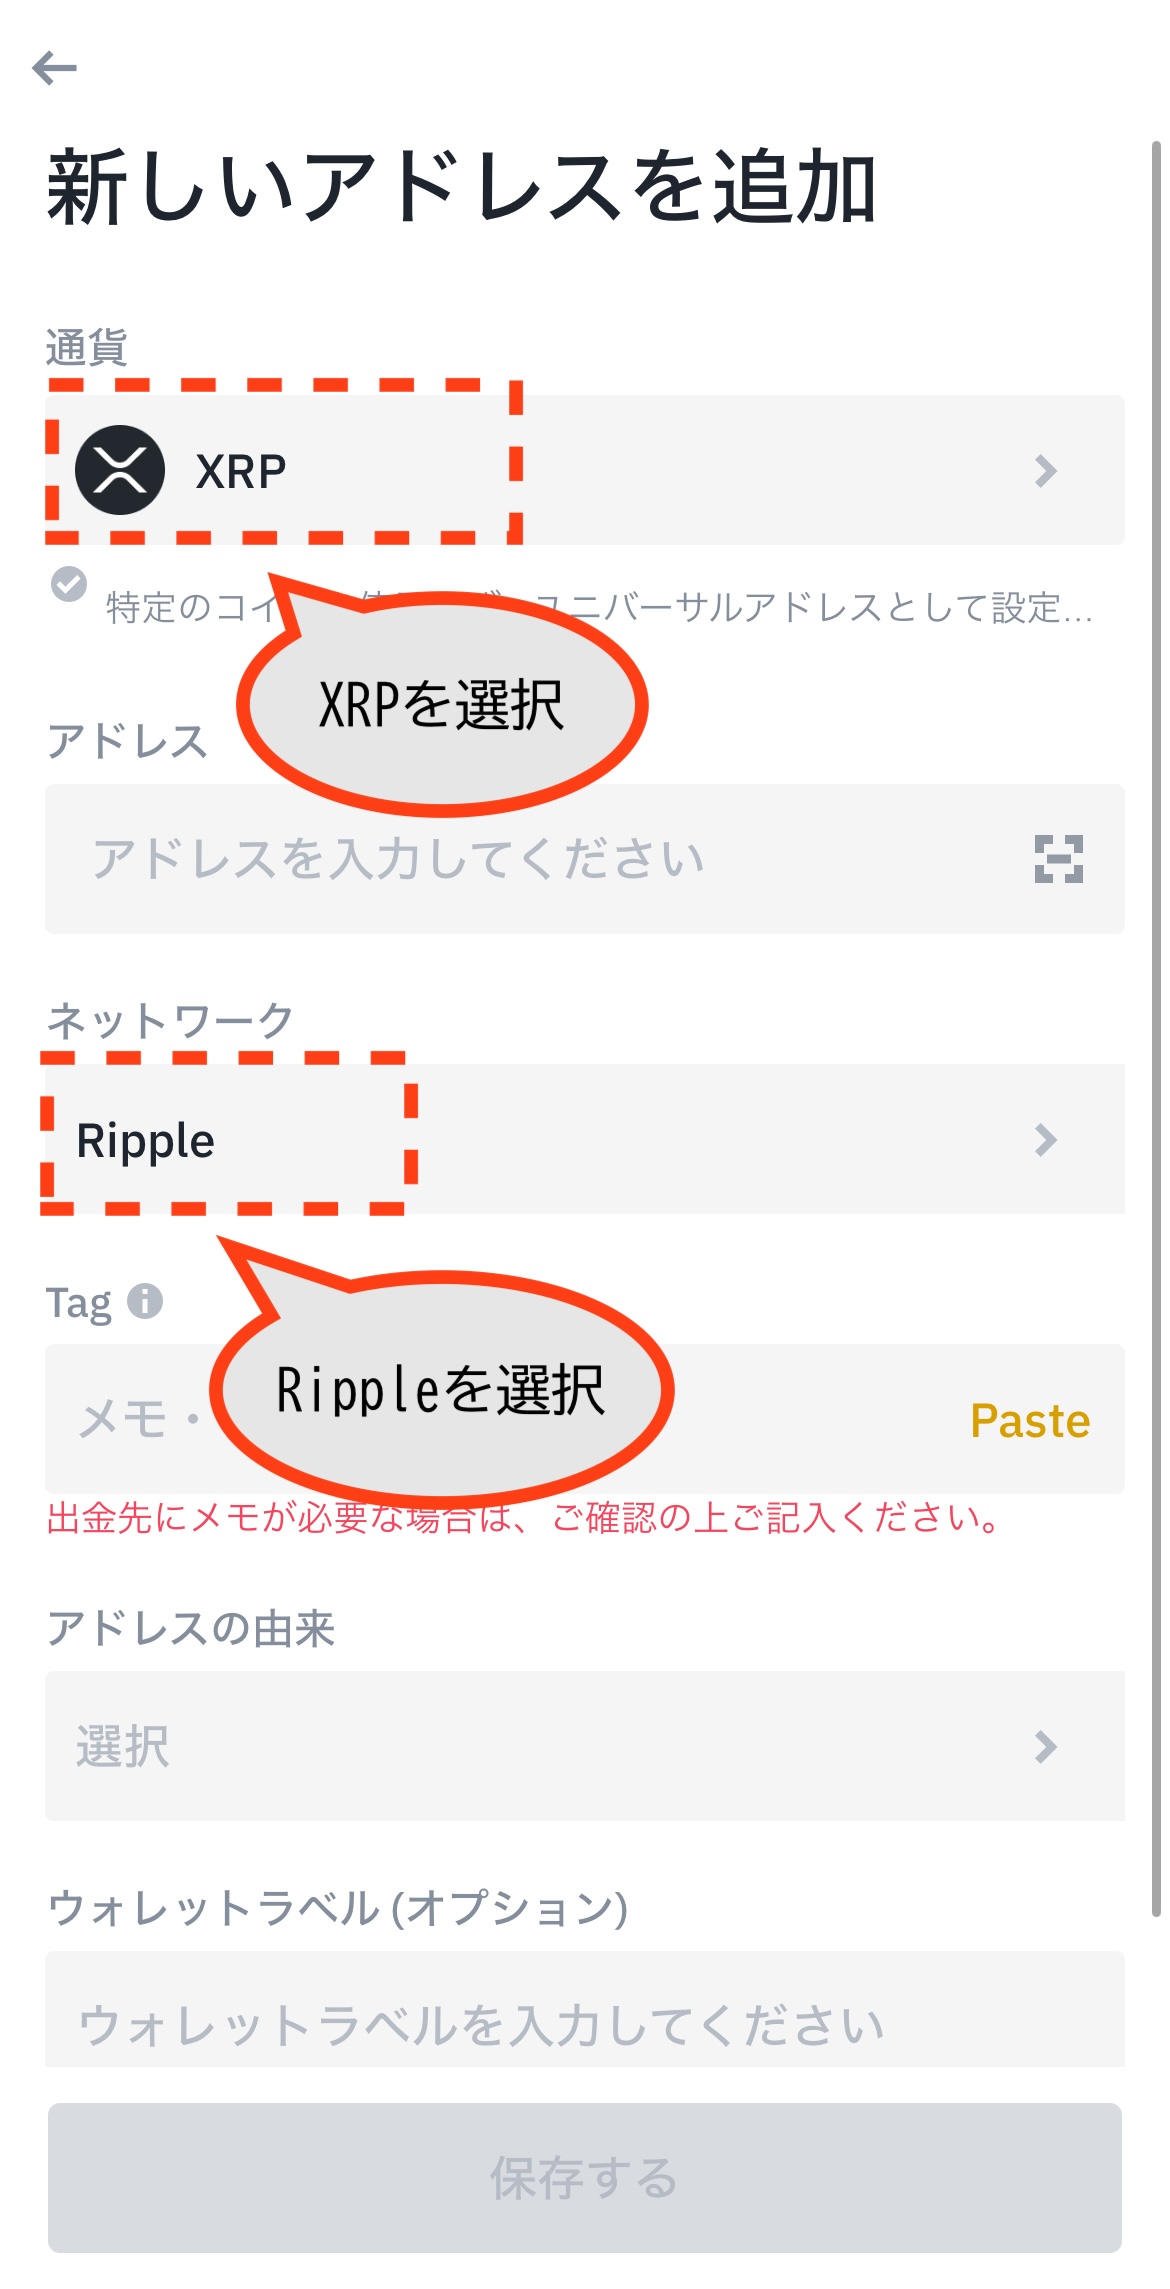 XRPとRippleを選択